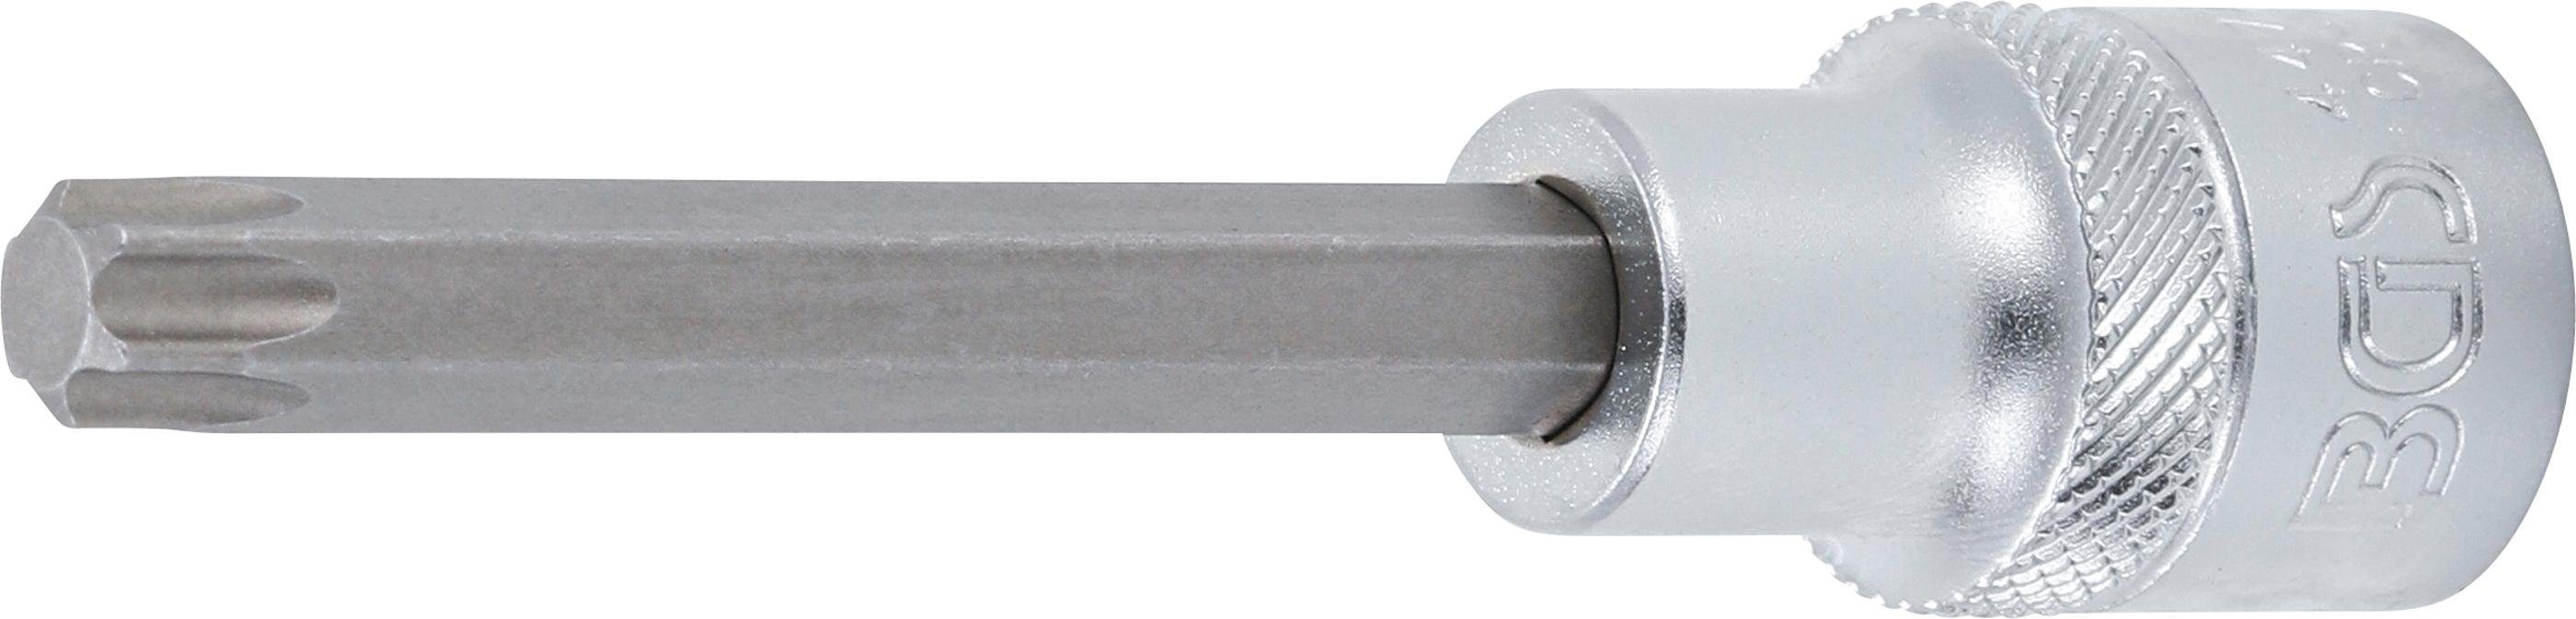 BGS technic Bit-Schraubendreher Bit-Einsatz, Länge 100 mm, Antrieb Innenvierkant 12,5 mm (1/2), T-Profil (für Torx) T50